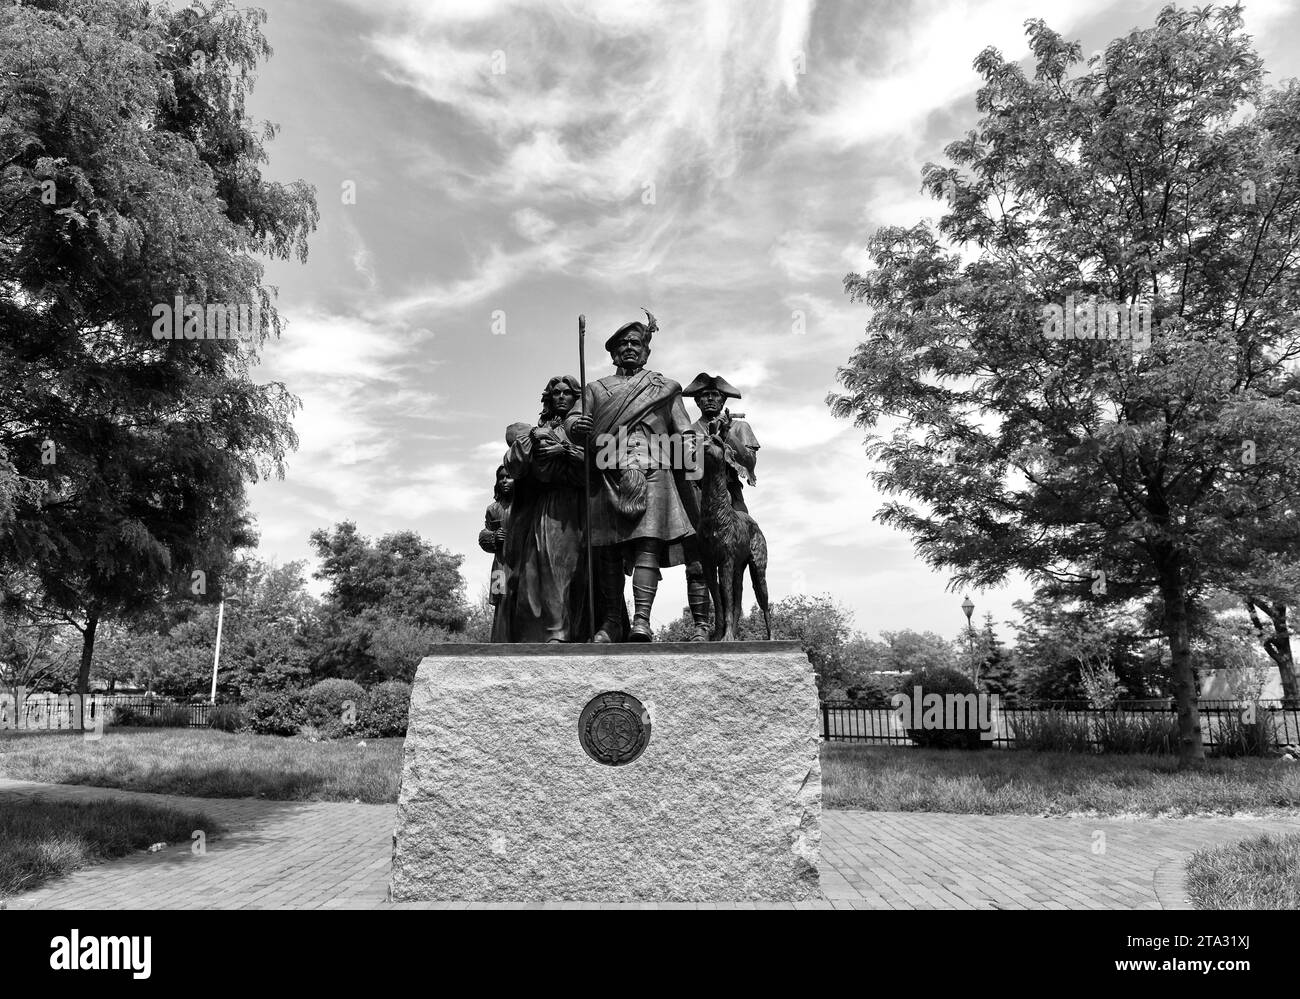 Philadelphia, USA - May 29, 2018: Monument to Scottish Immigrants in Philadelphia, PA, USA. Stock Photo